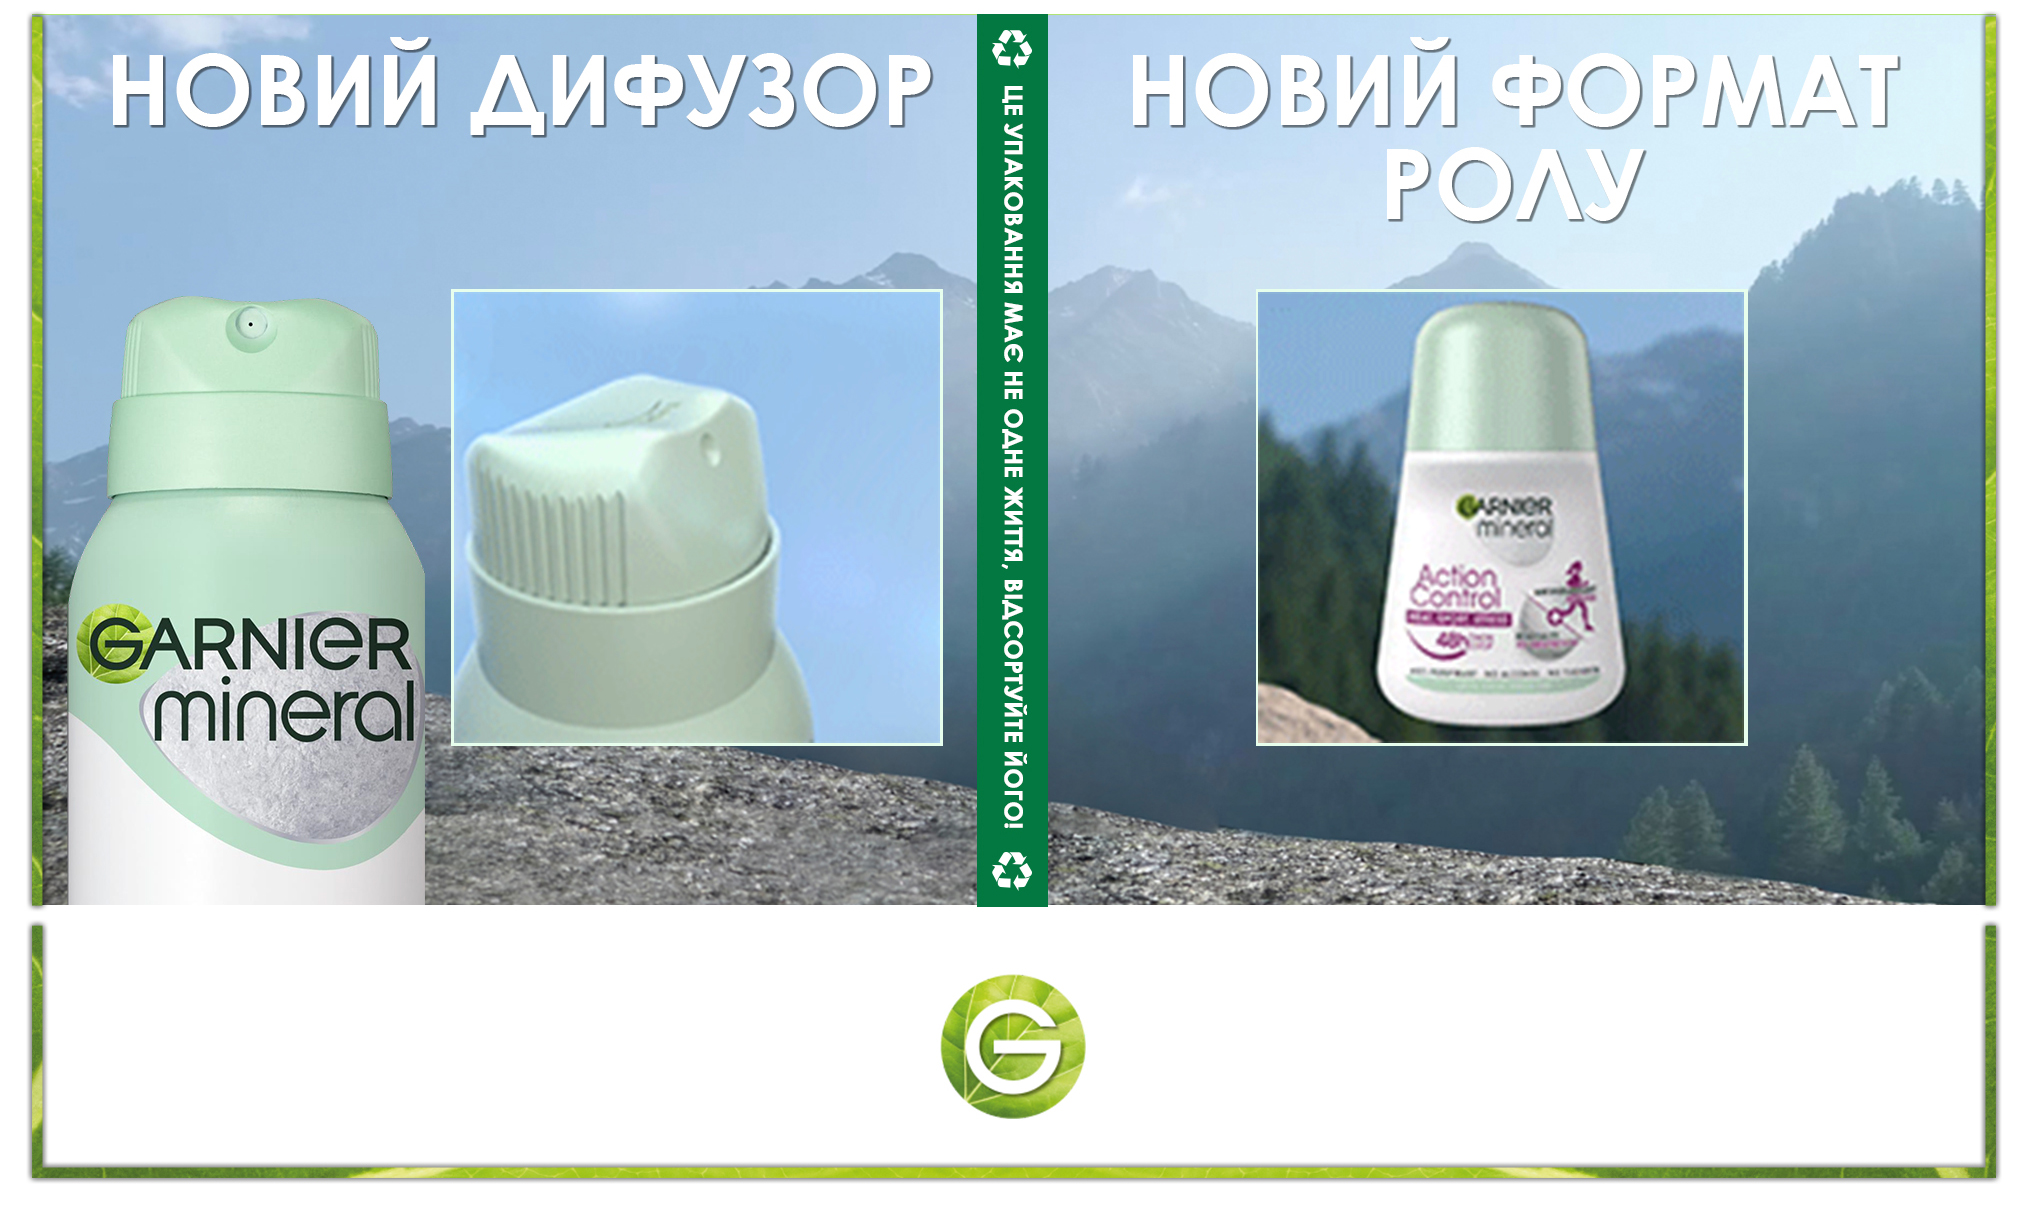 Garnier Mineral Deodorant